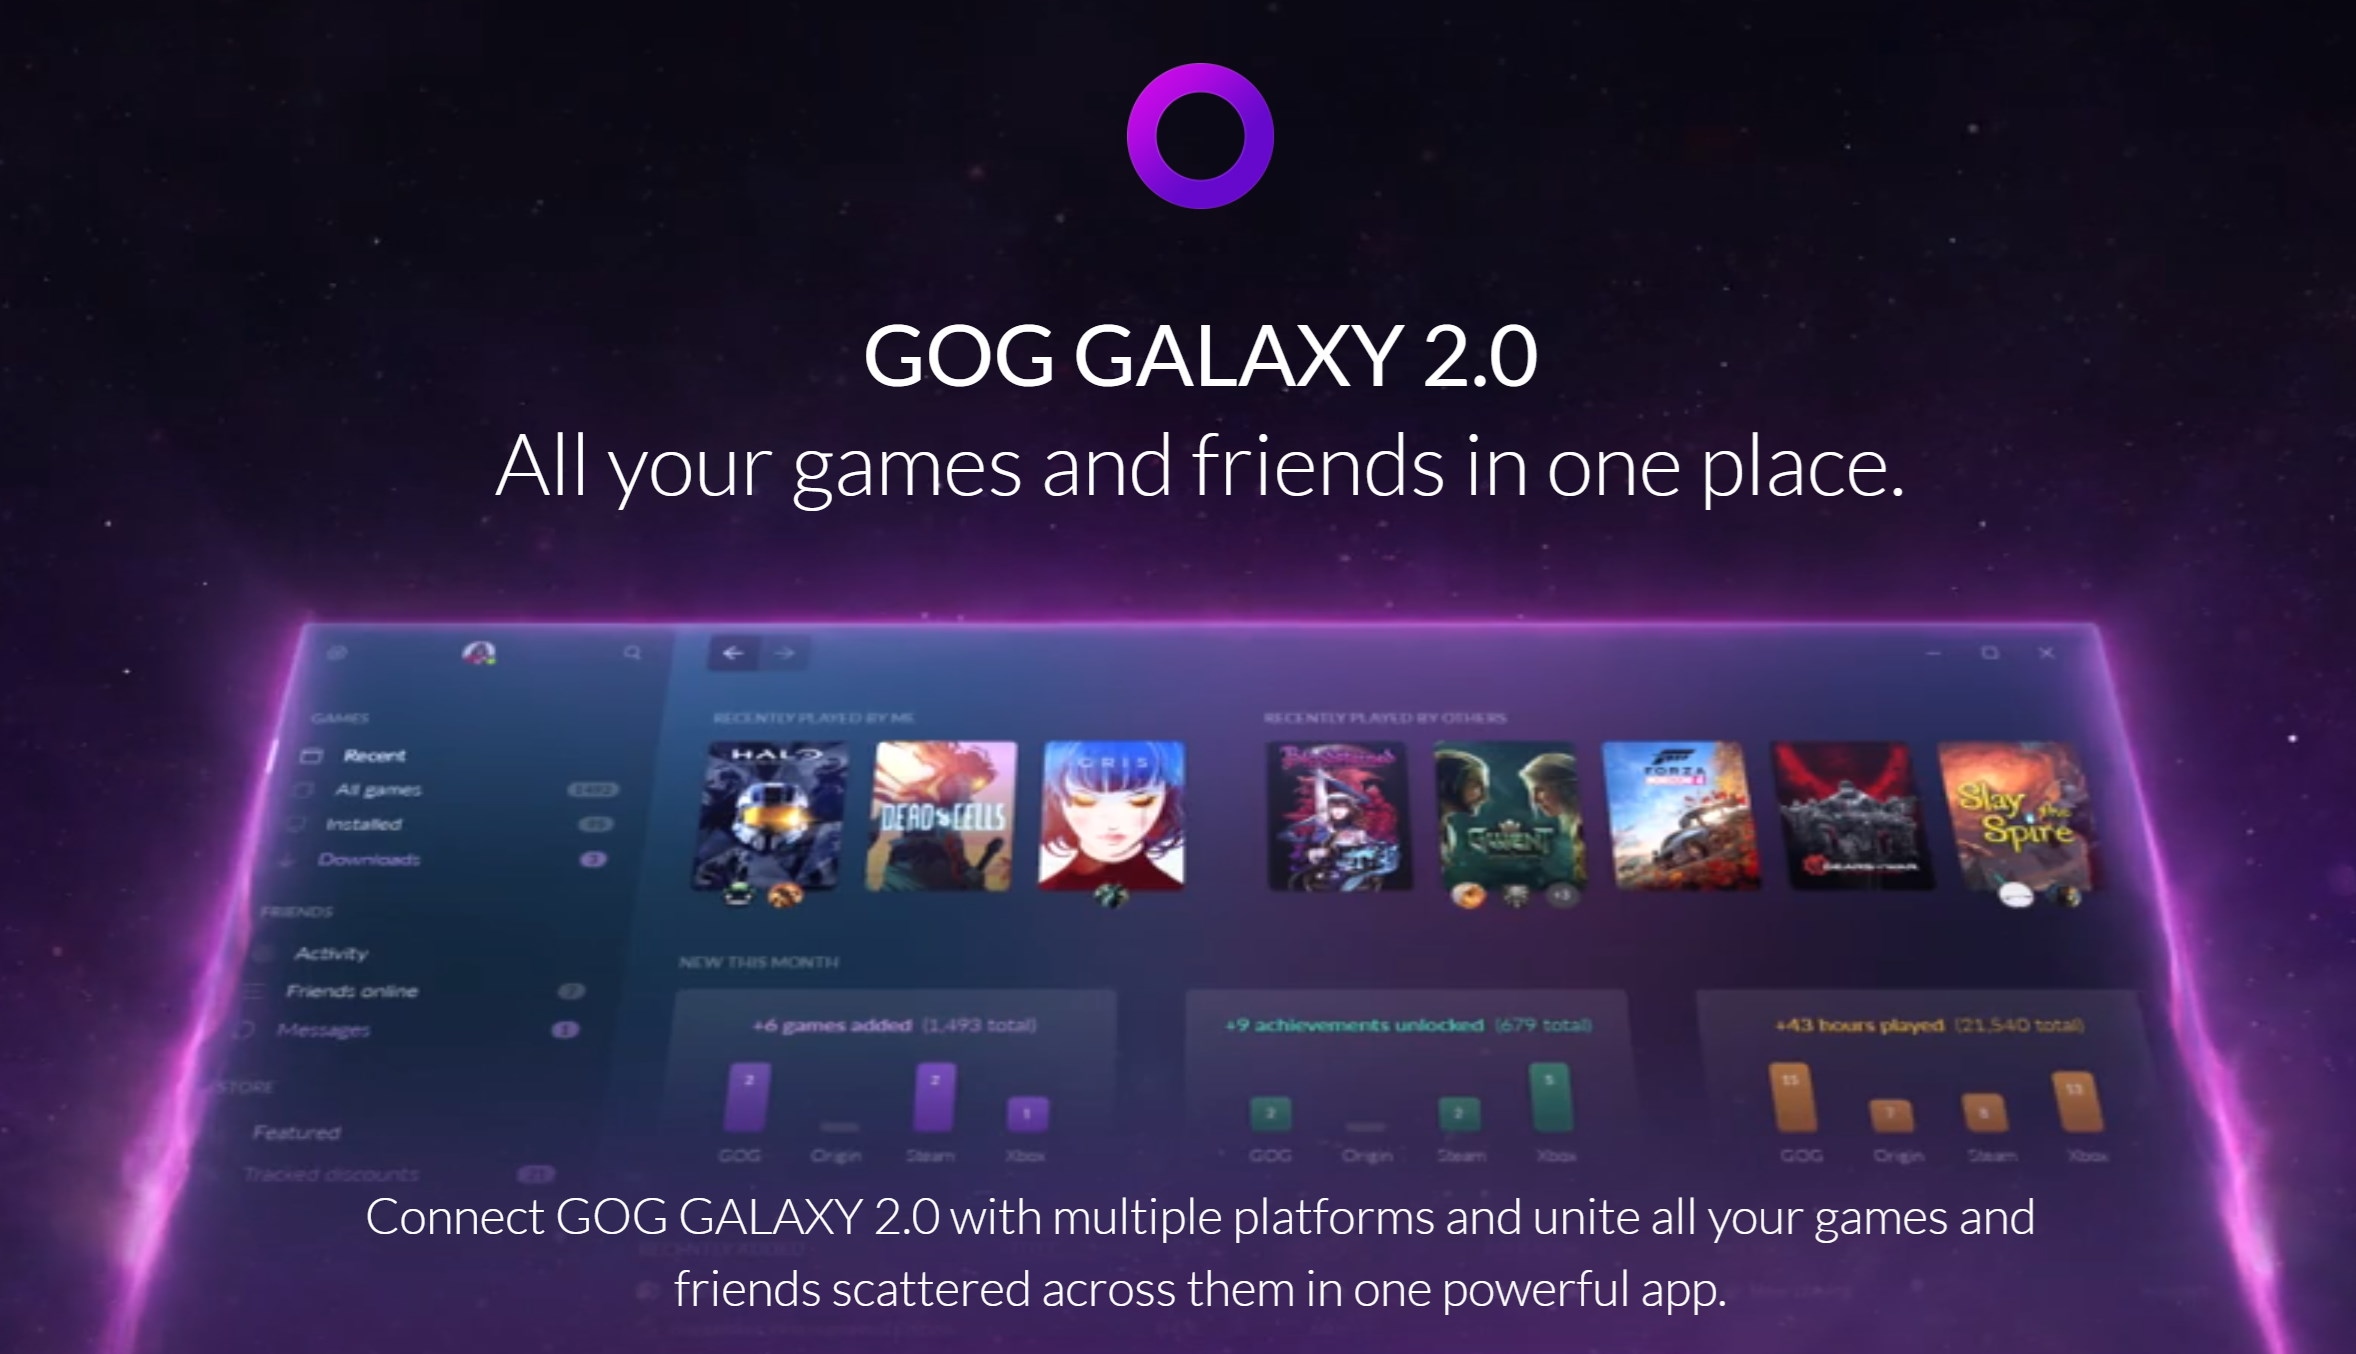 gog galaxy 2.0 controller support